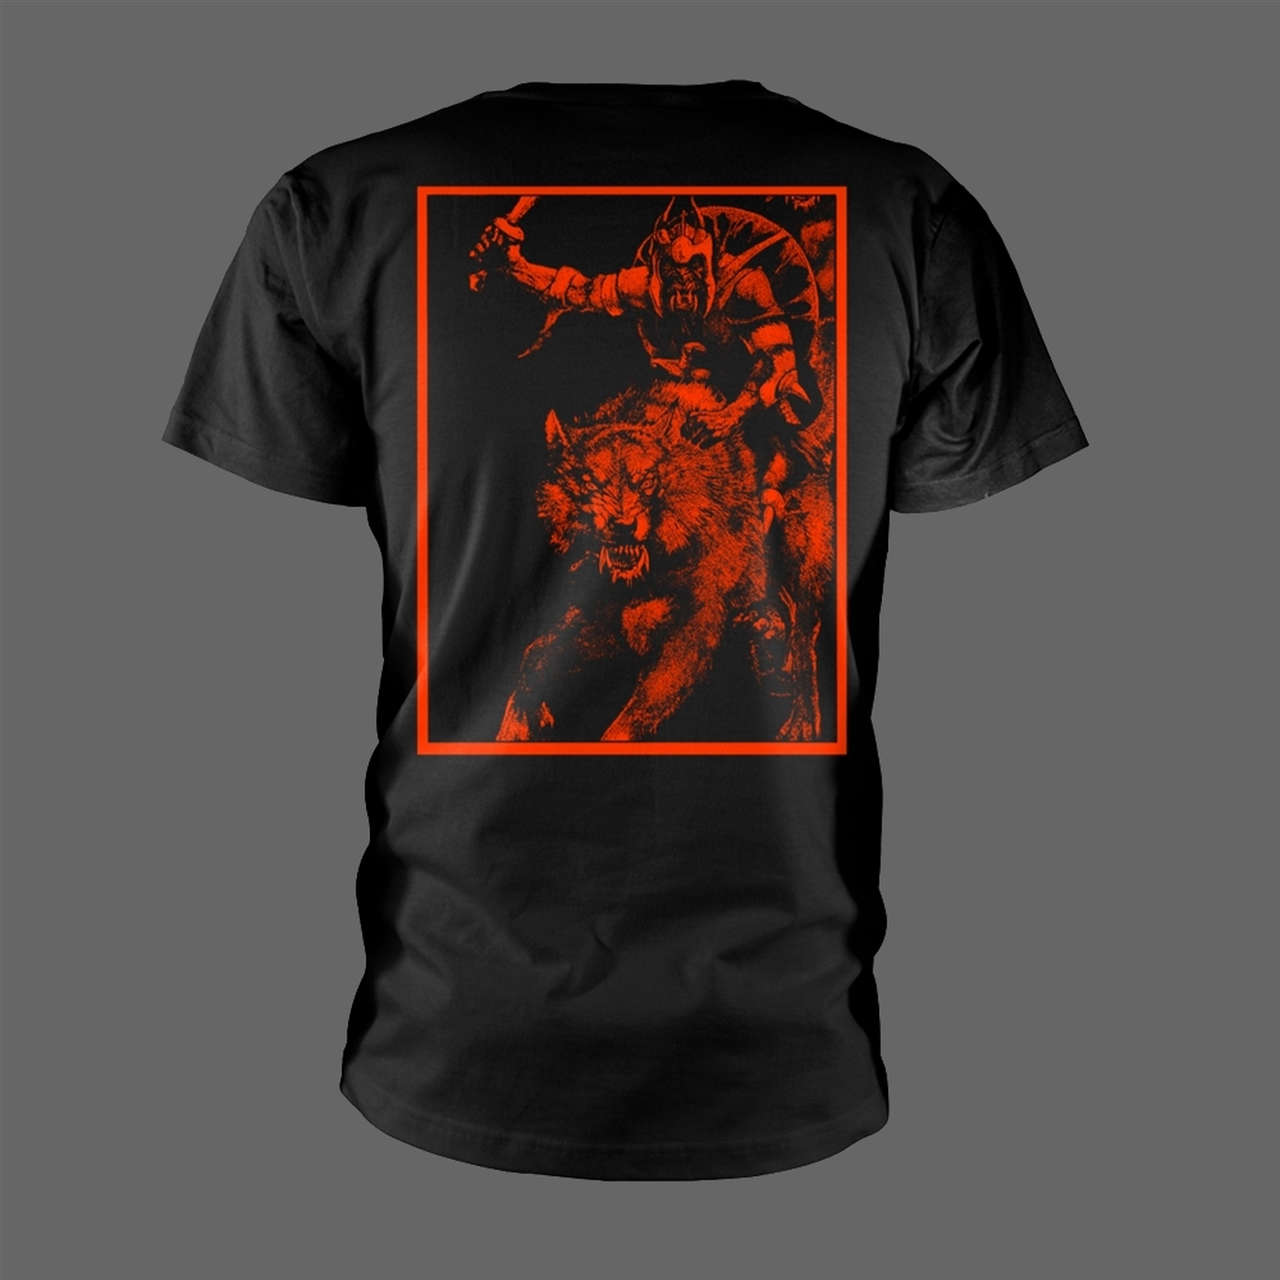 Marduk - Strigzscara: Warwolf (T-Shirt)